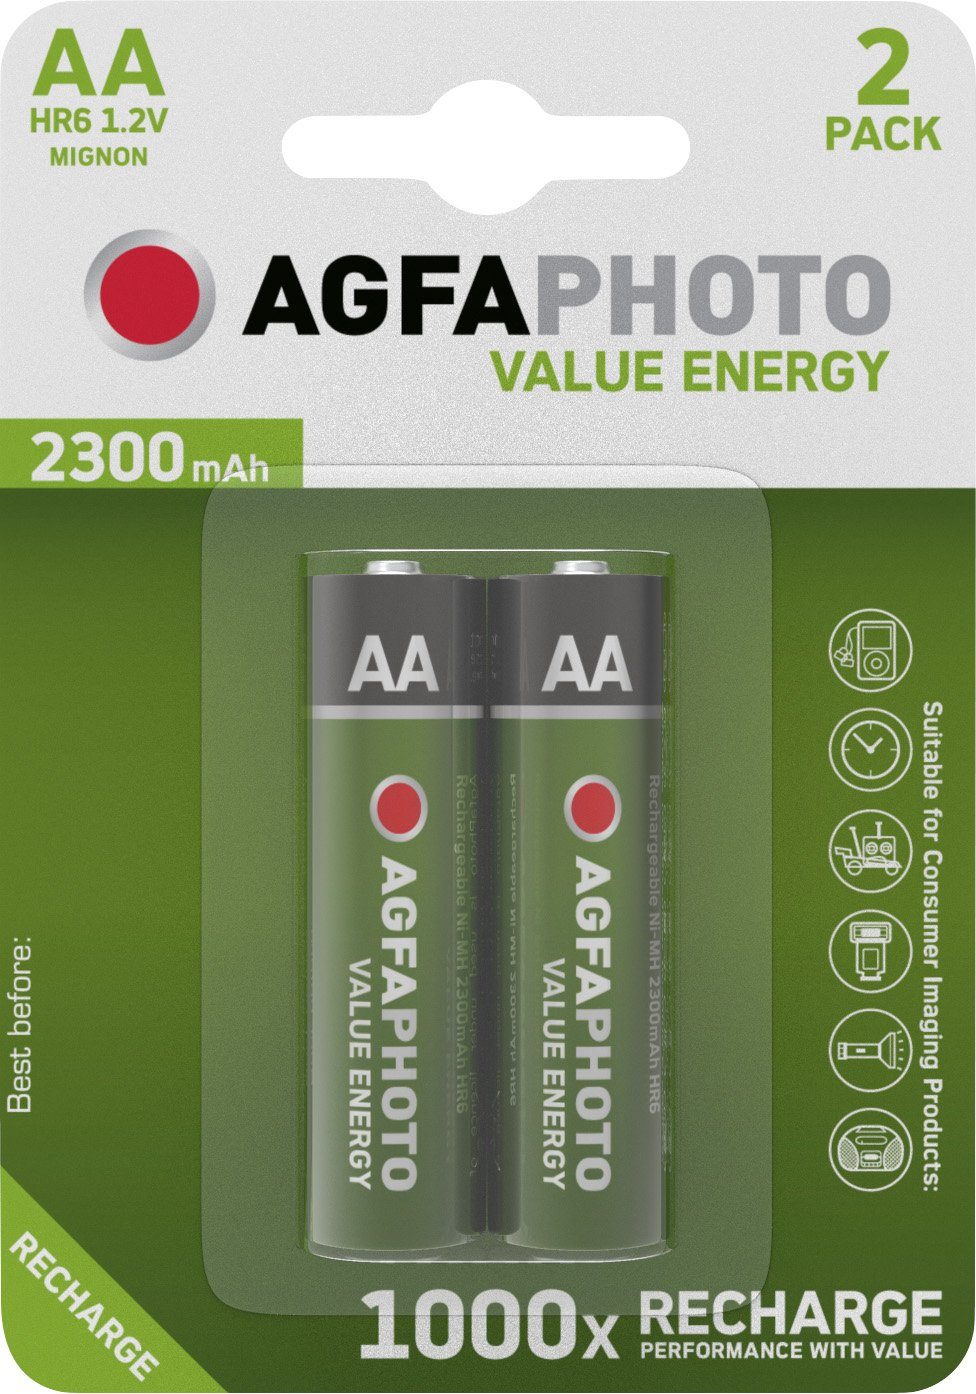 AgfaPhoto Agfaphoto 1.2V/2300mAh Akku AA, HR06, Mignon, NiMH, Akku Ret Energy, Value